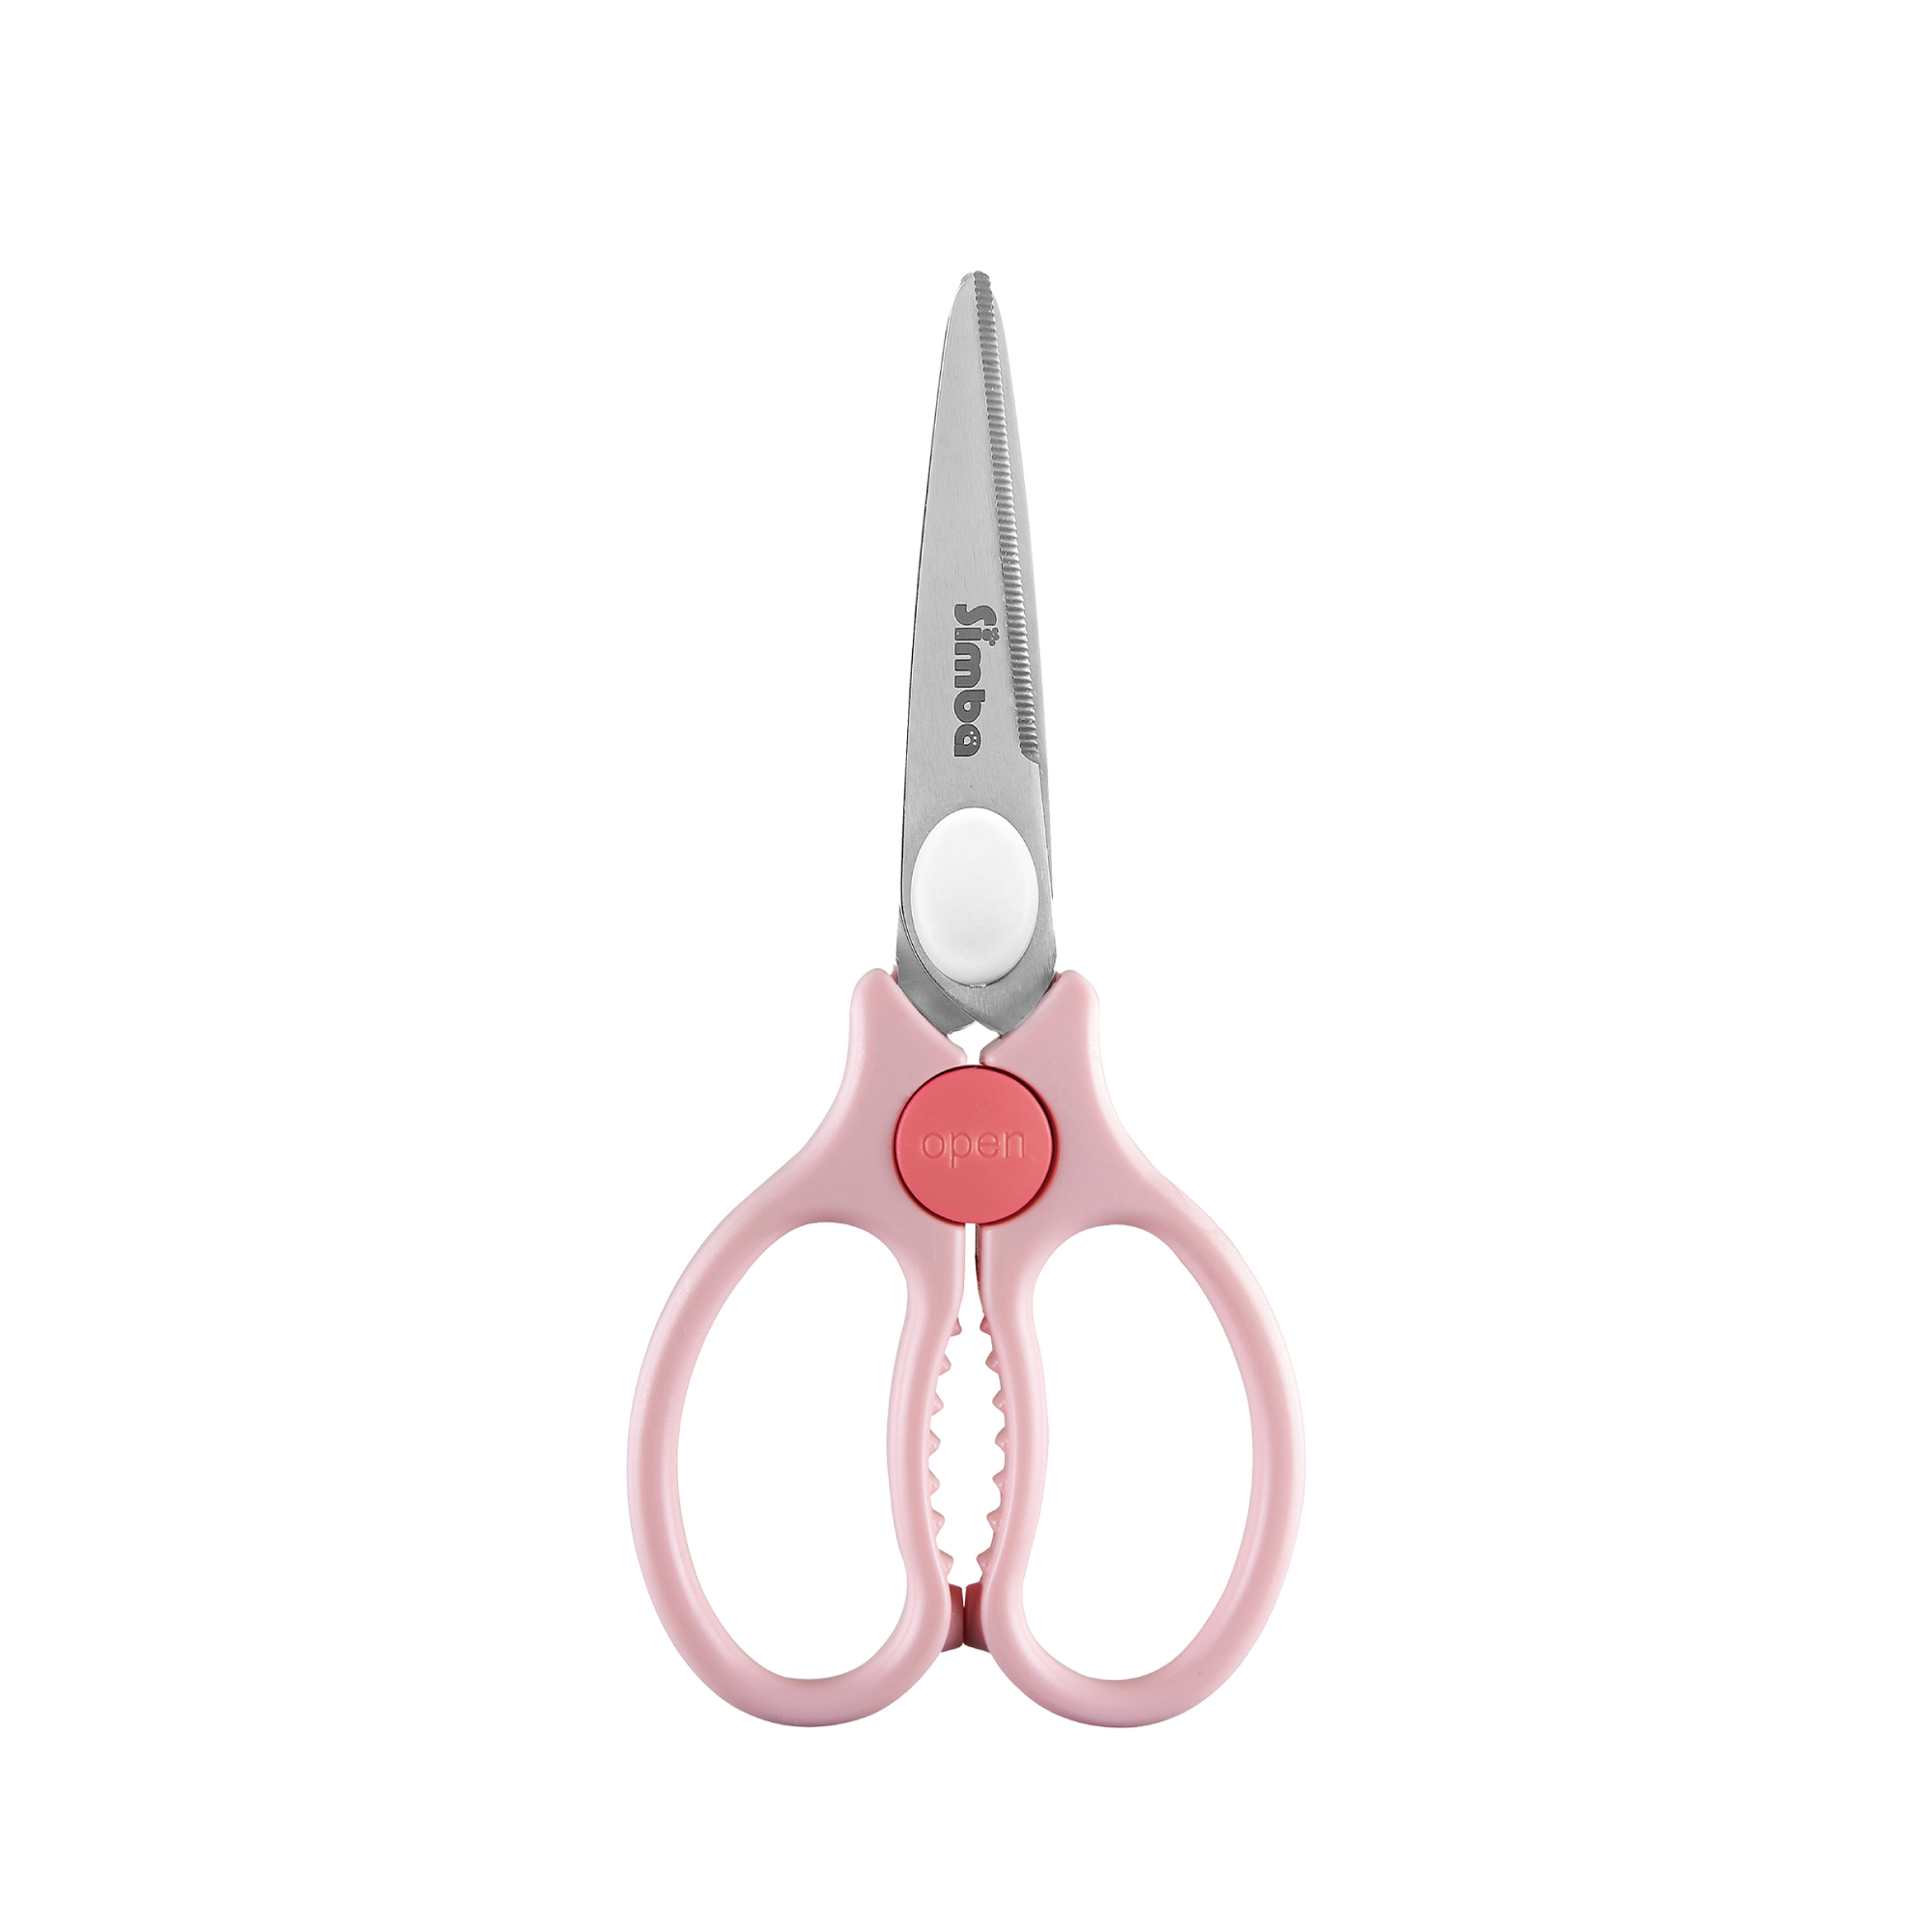  Pink Multi-Purpose Mini Scissors Portable Functional